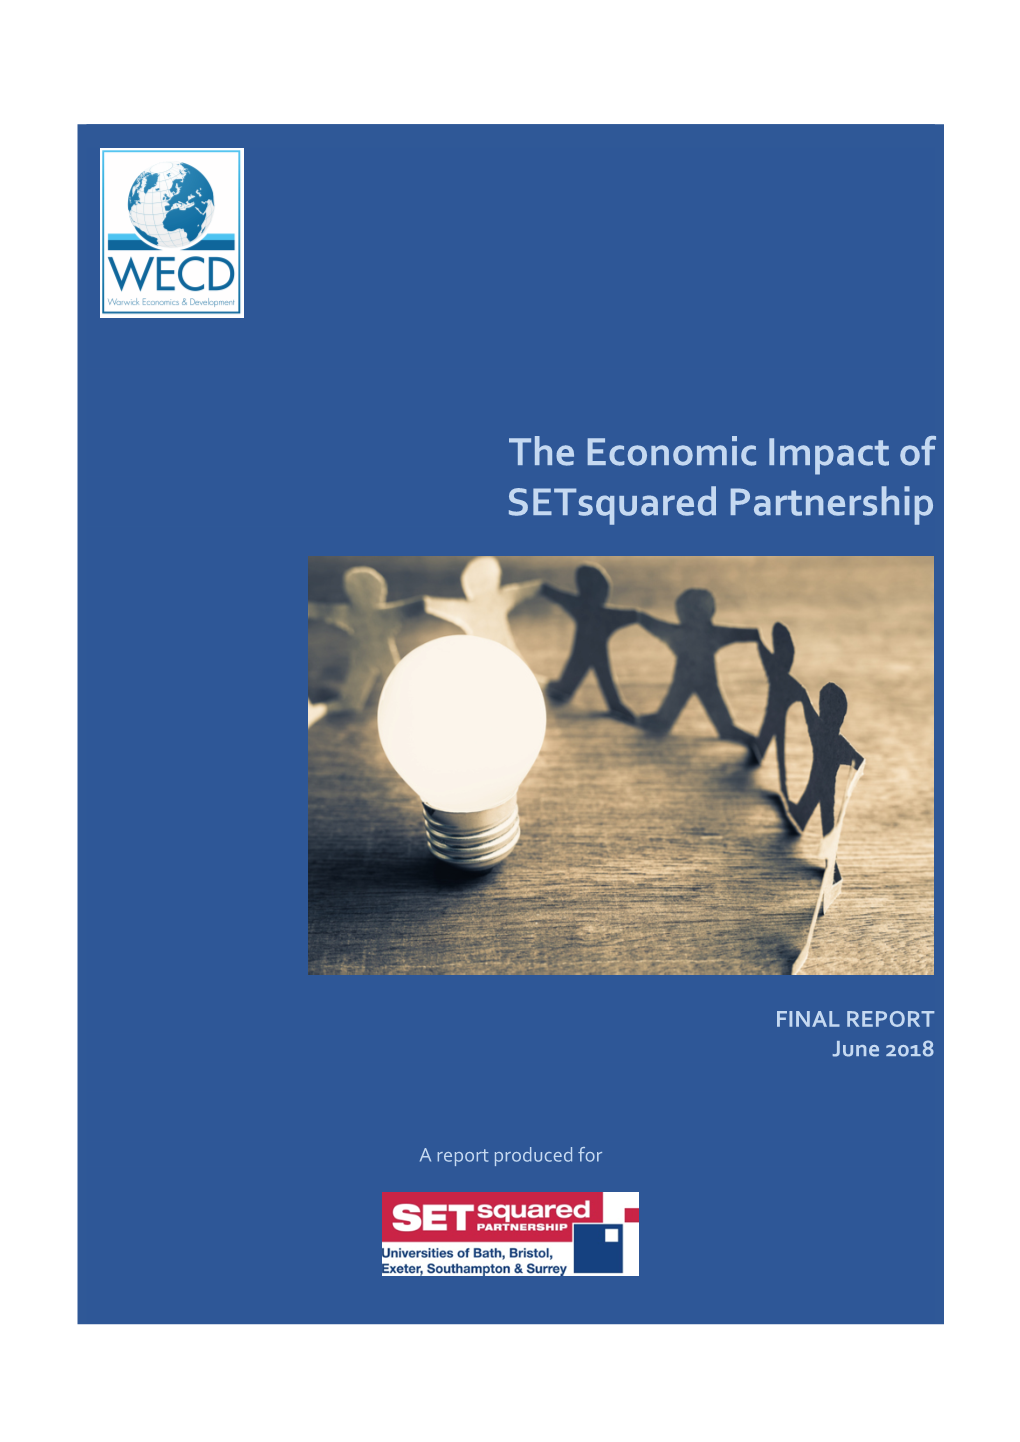 The Economic Impact of Setsquared Partnership